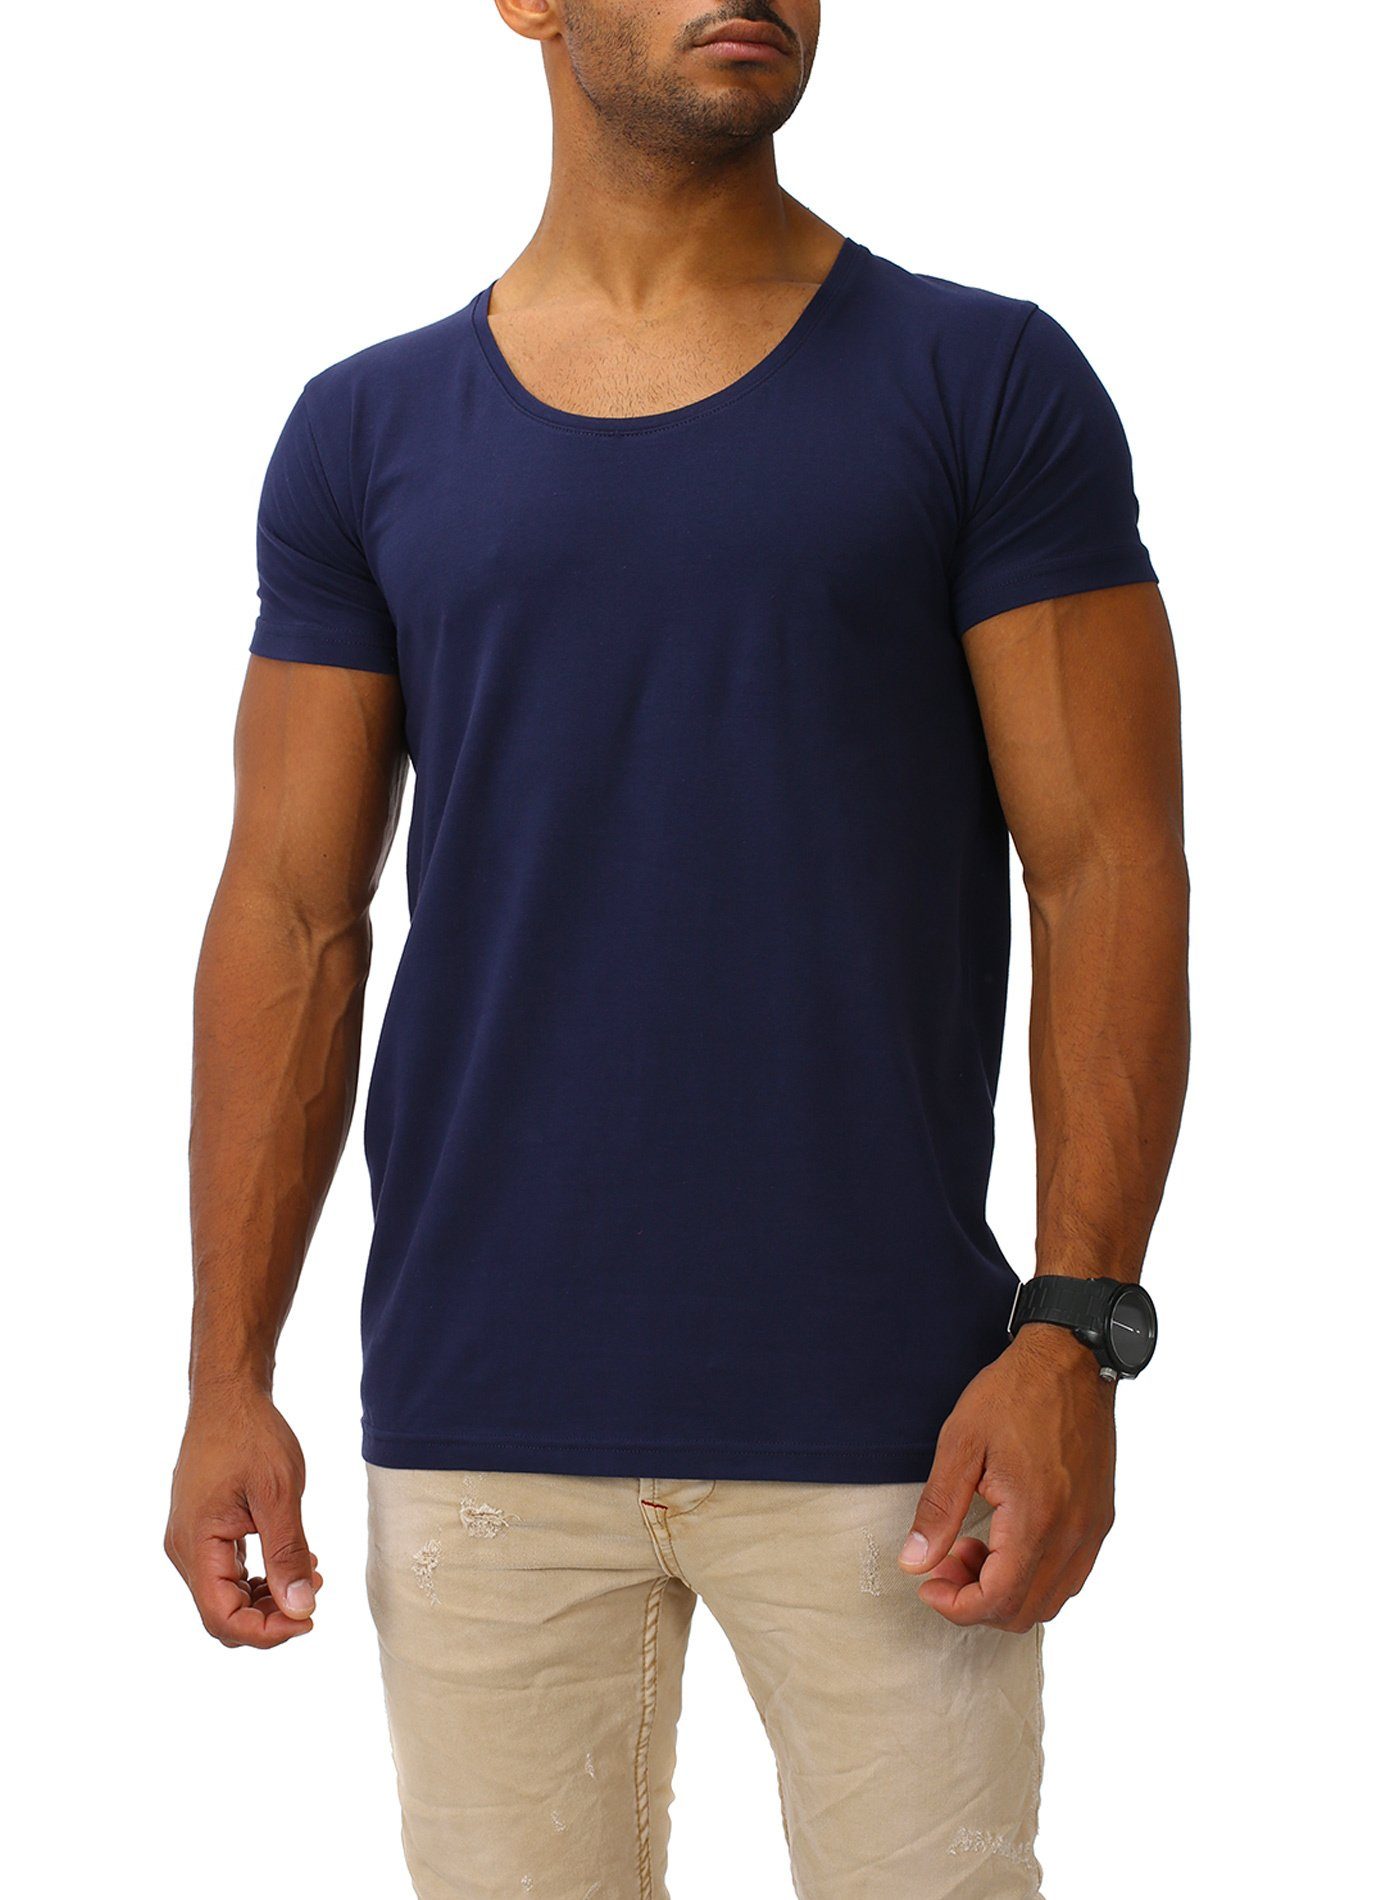 Joe Franks T-Shirt mit Rundhalsausschnitt navy